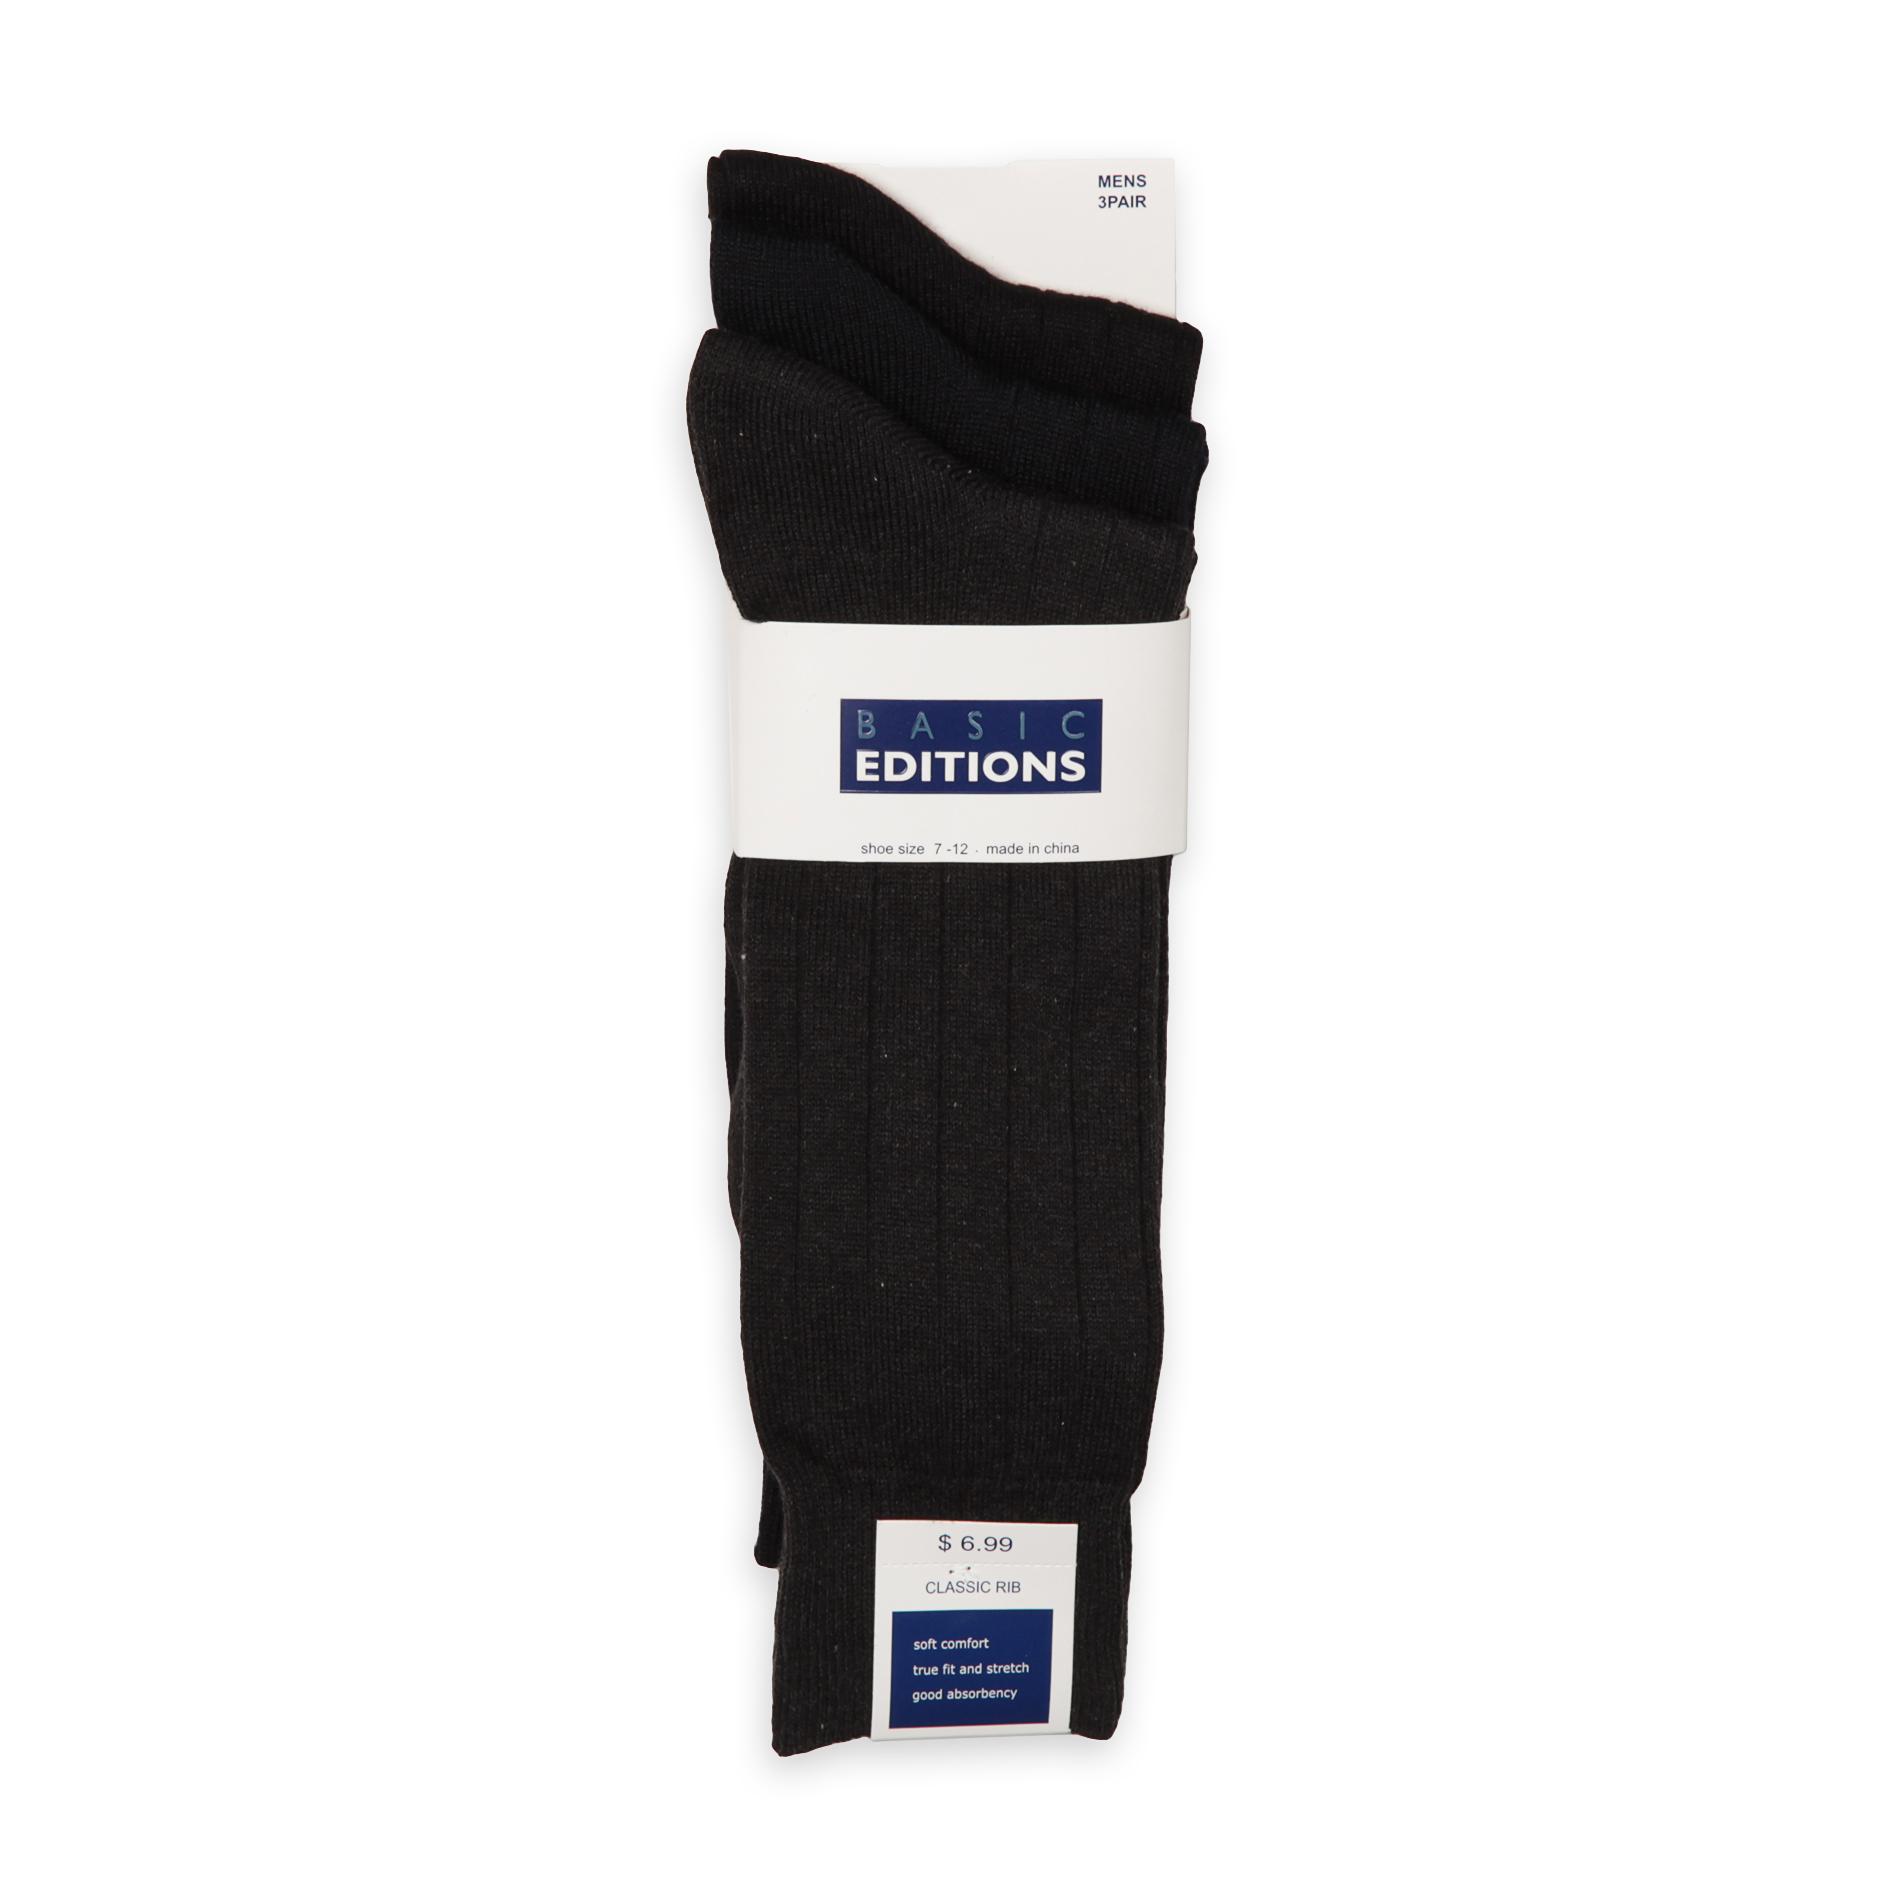 Basic Editions Men's 3-Pairs Ribbed Knit Socks